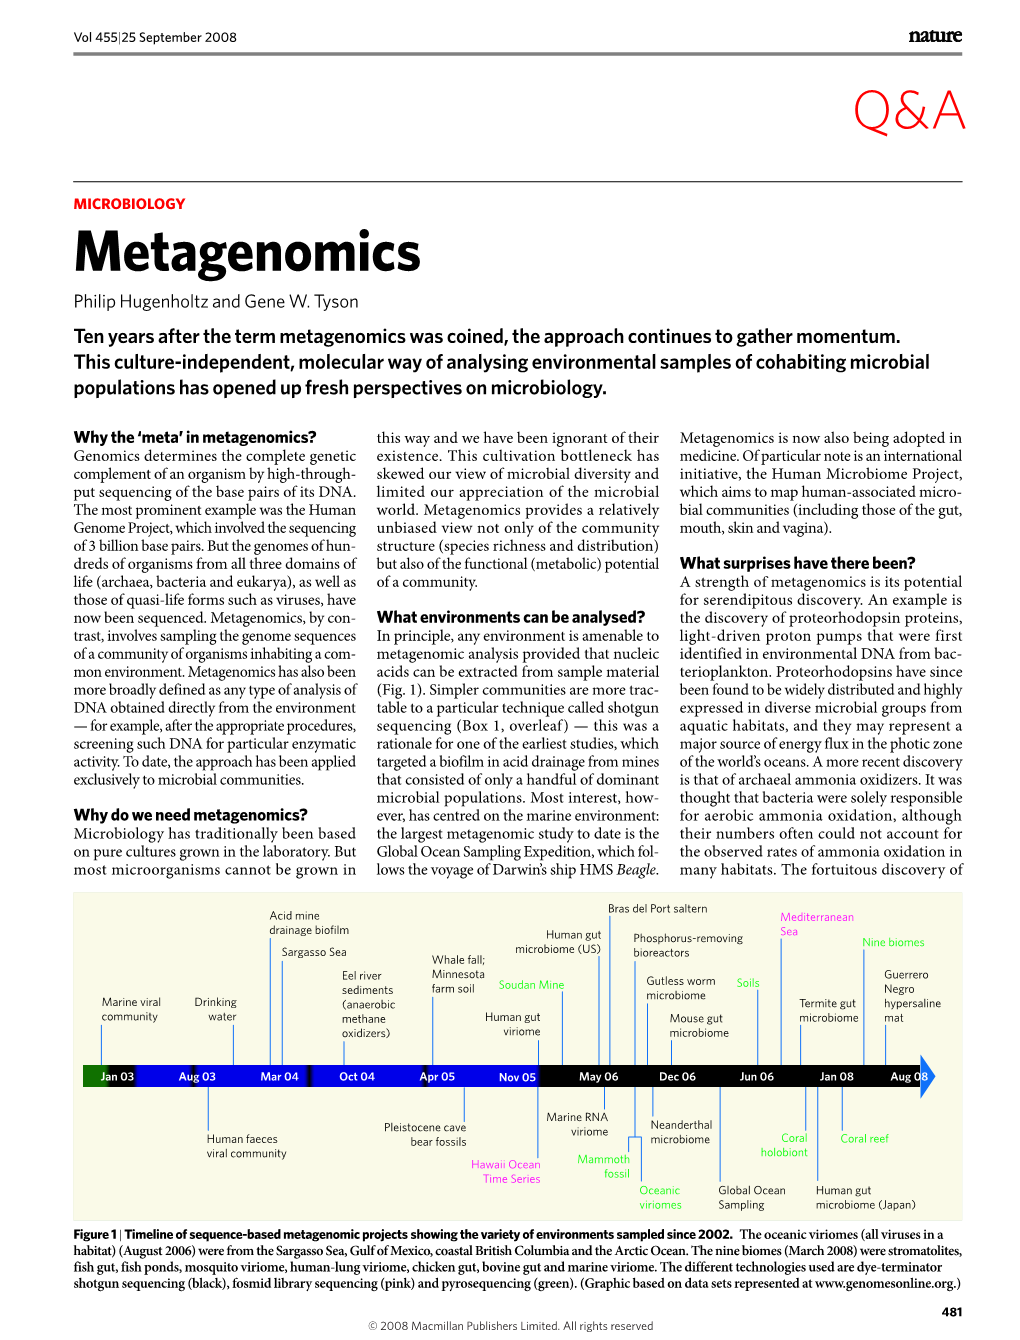 25.9 Metagenomics NV Q&A MH IF